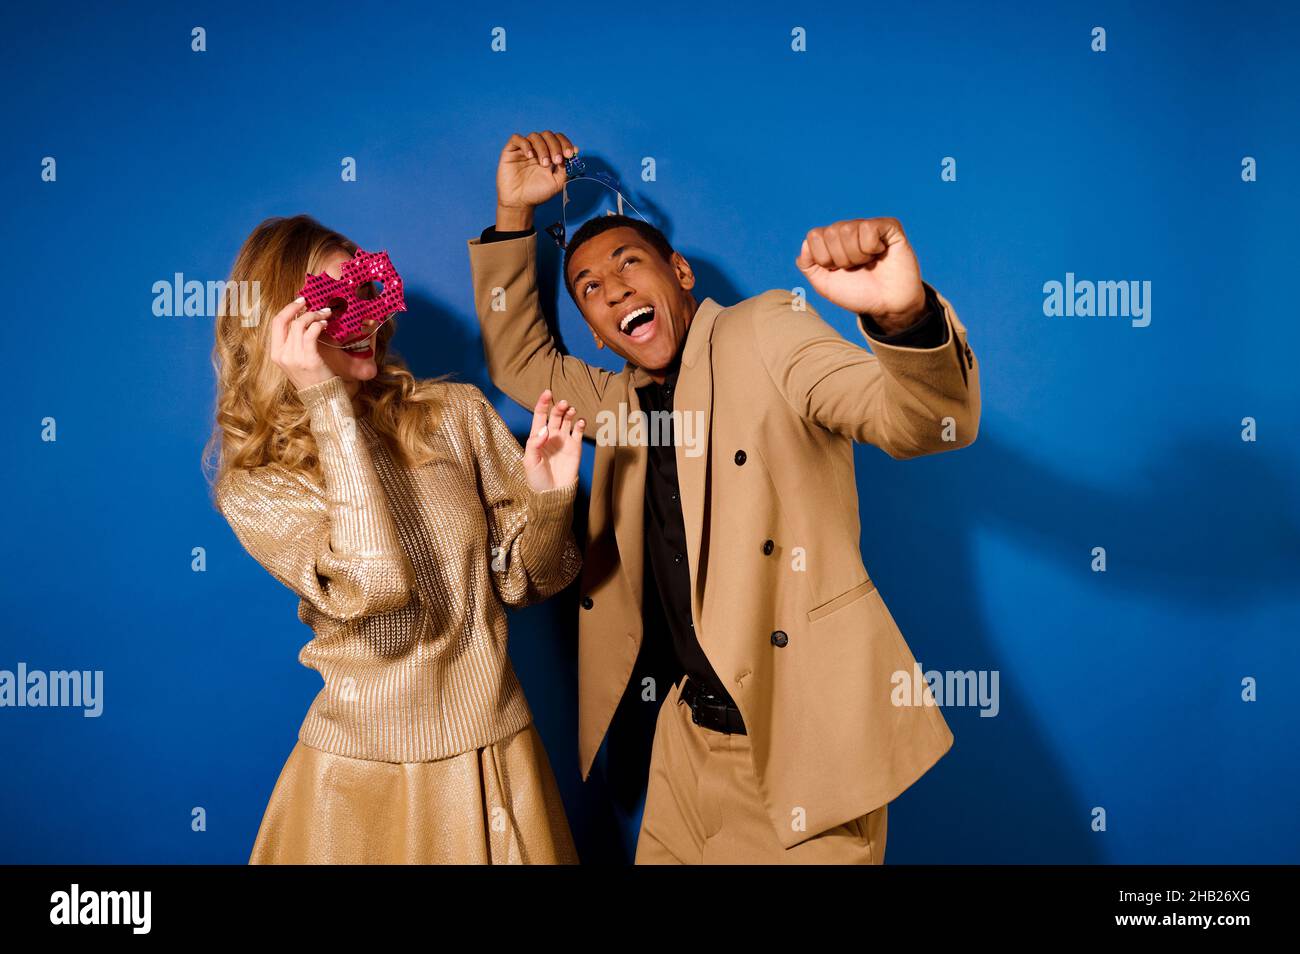 Enthusiastic energetic guy and girl with mask Stock Photo